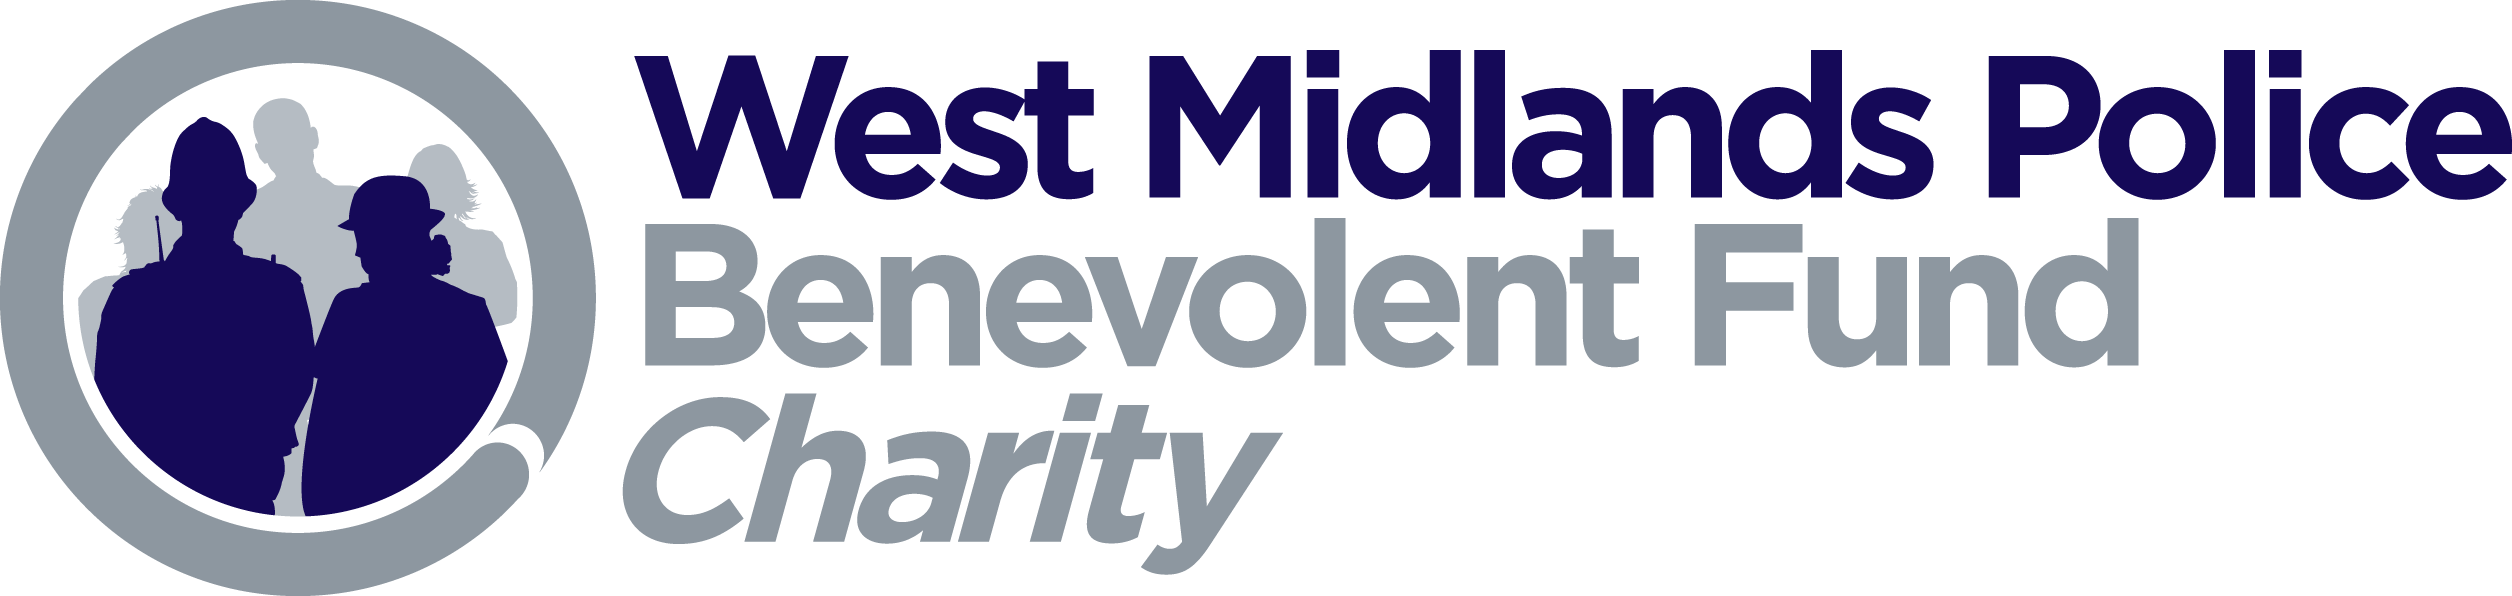 West Midlands Police Benevolent Fund Charity logo